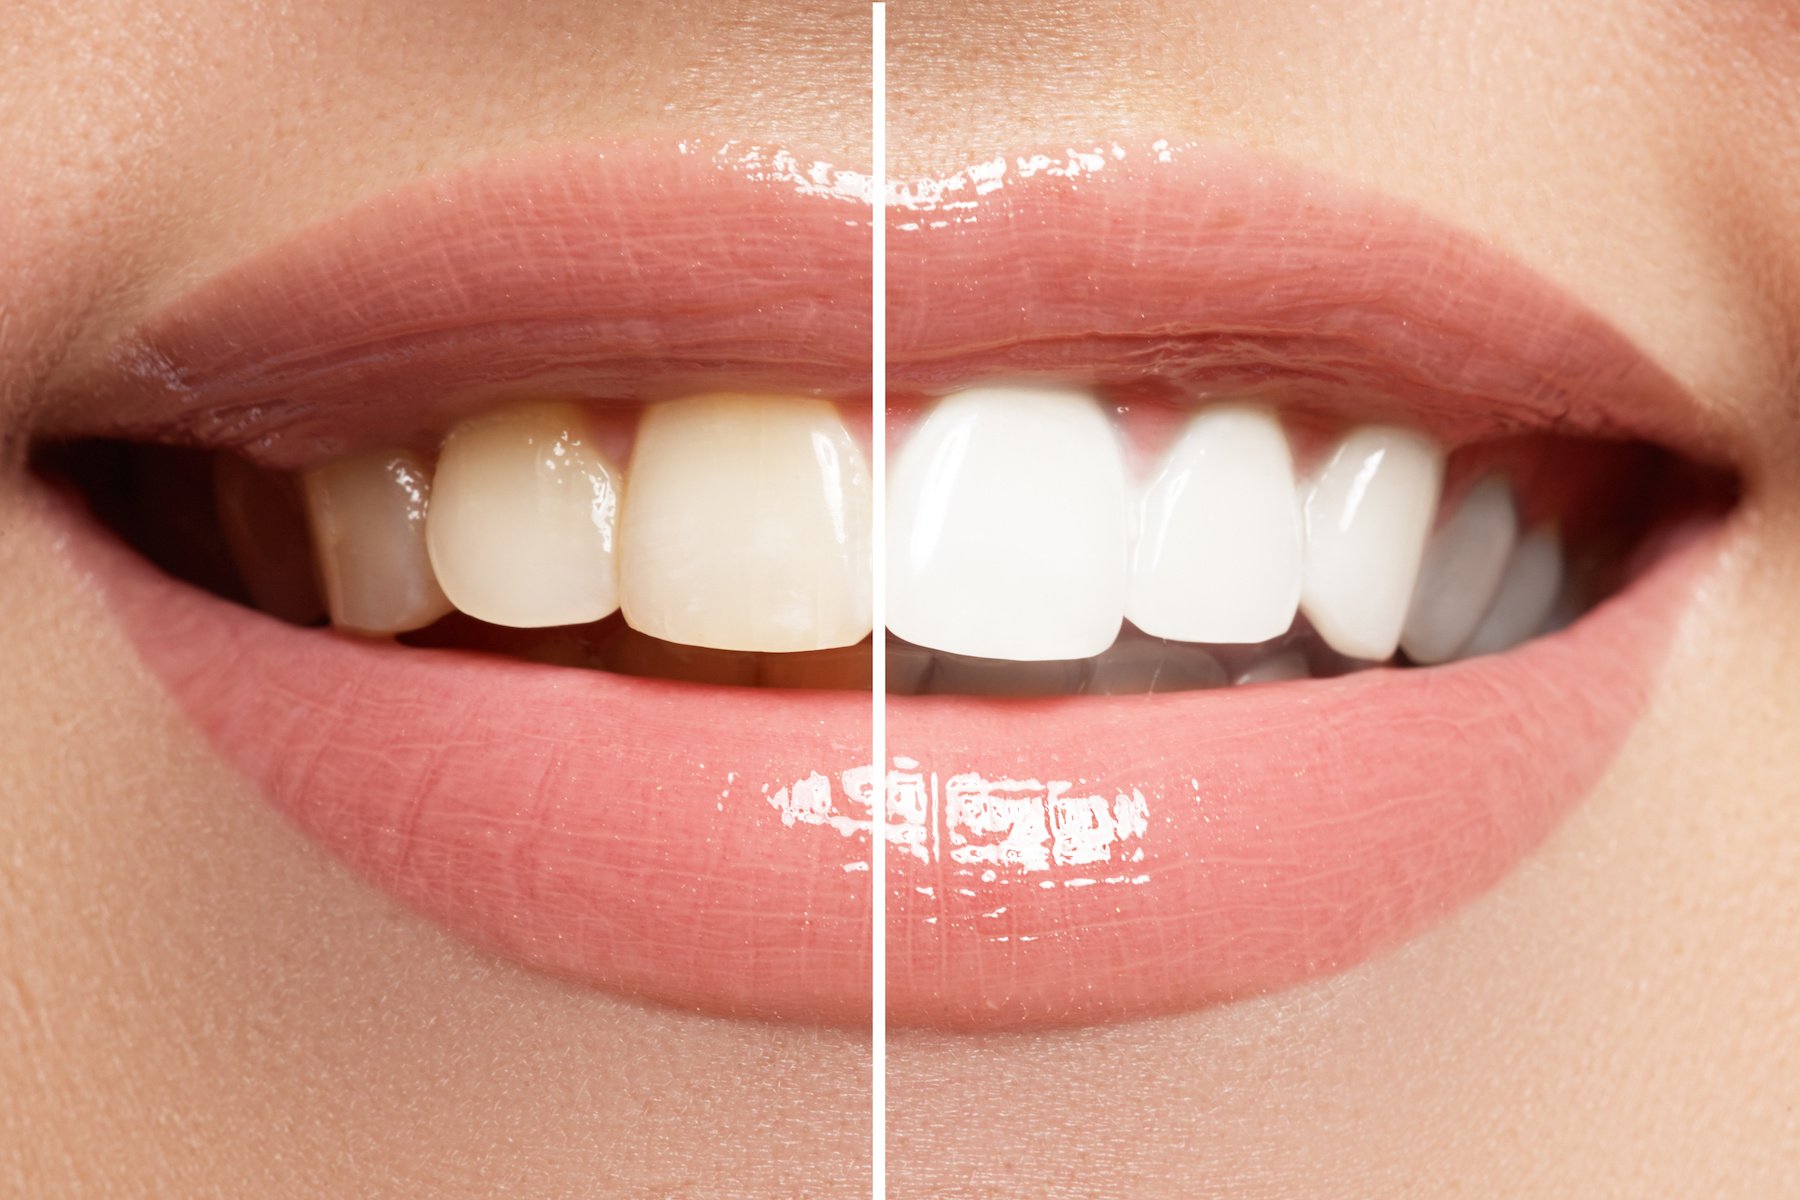 cosmetic dentistry whitening teeth dentist clinic tooth crown veneers kelowna dr sandy dr peter mitchell